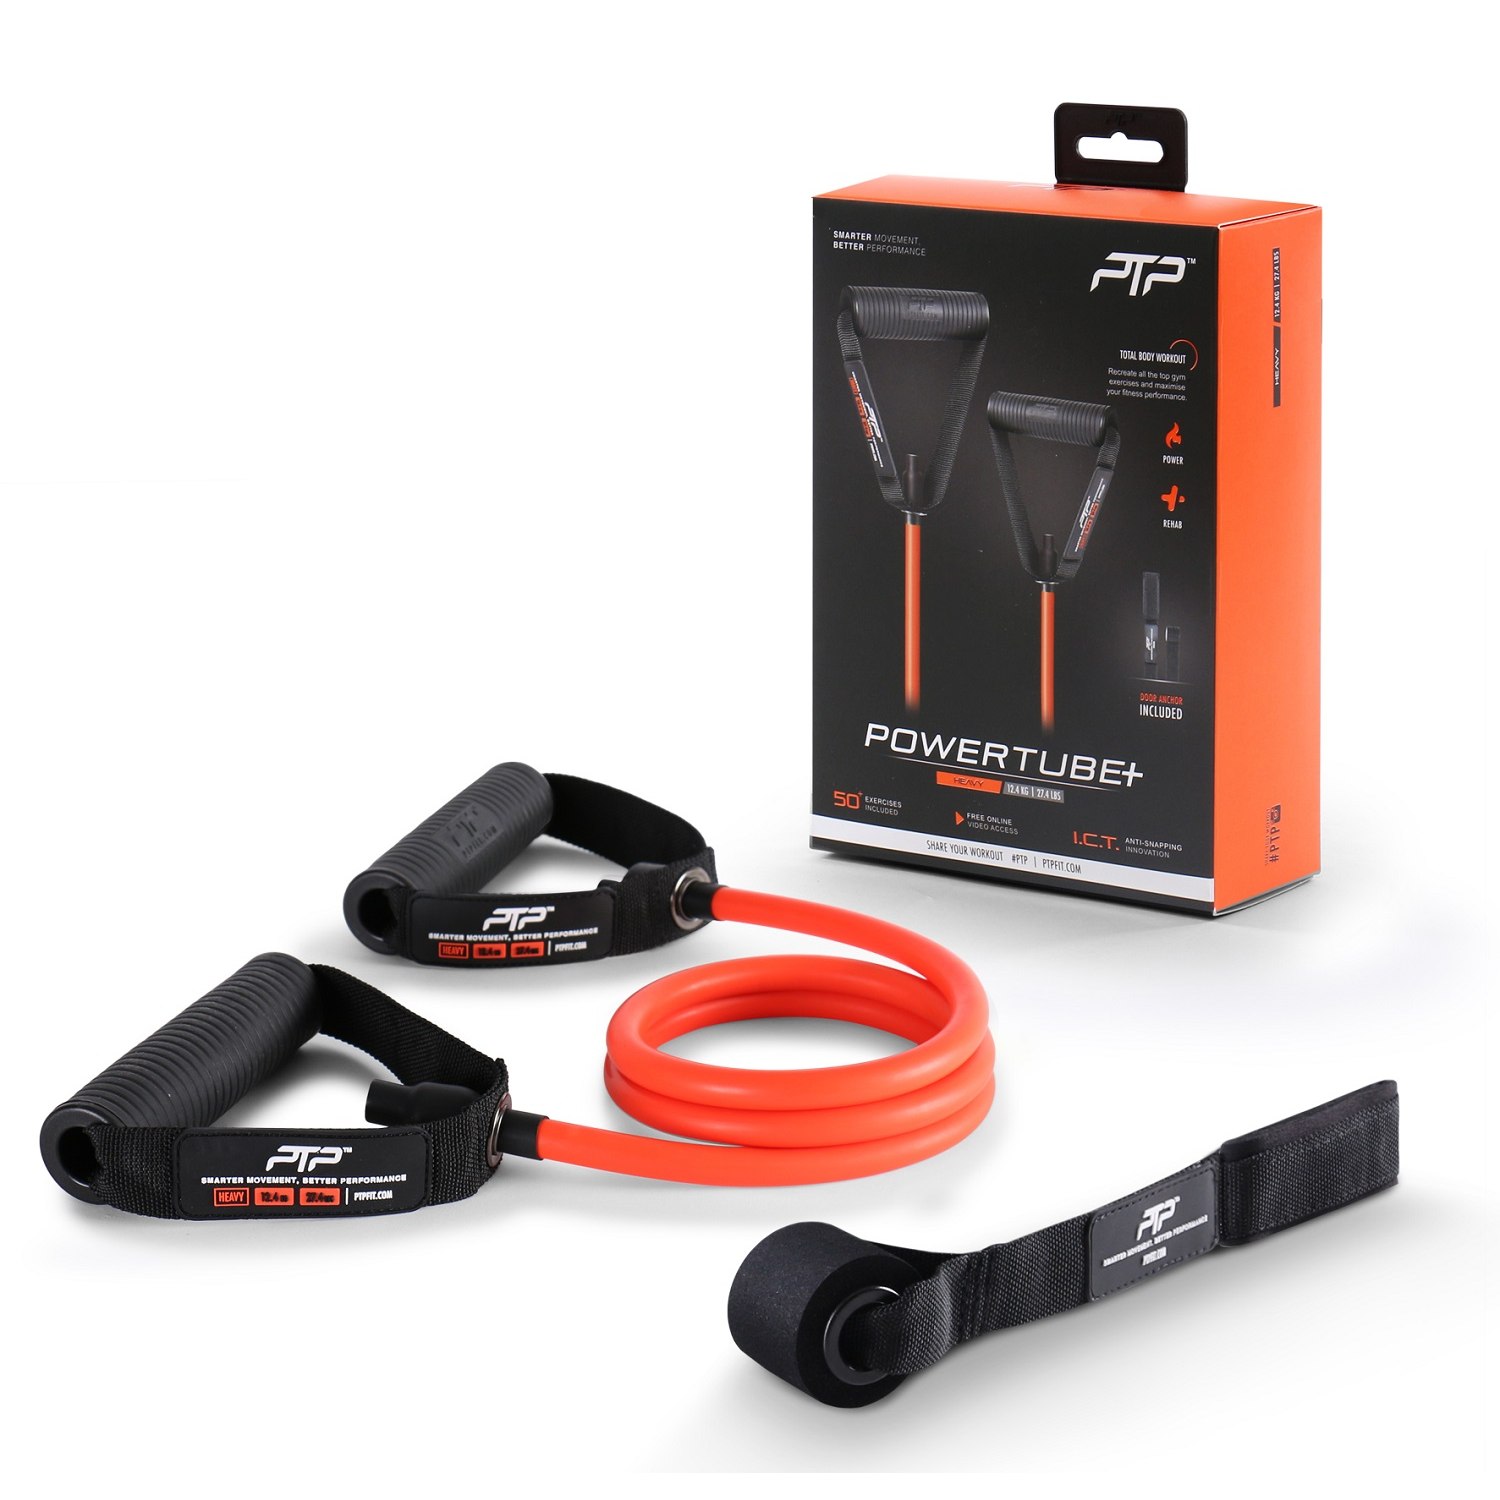 Productfoto van PTP PowerTube+ Heavy Resistance Band - orange